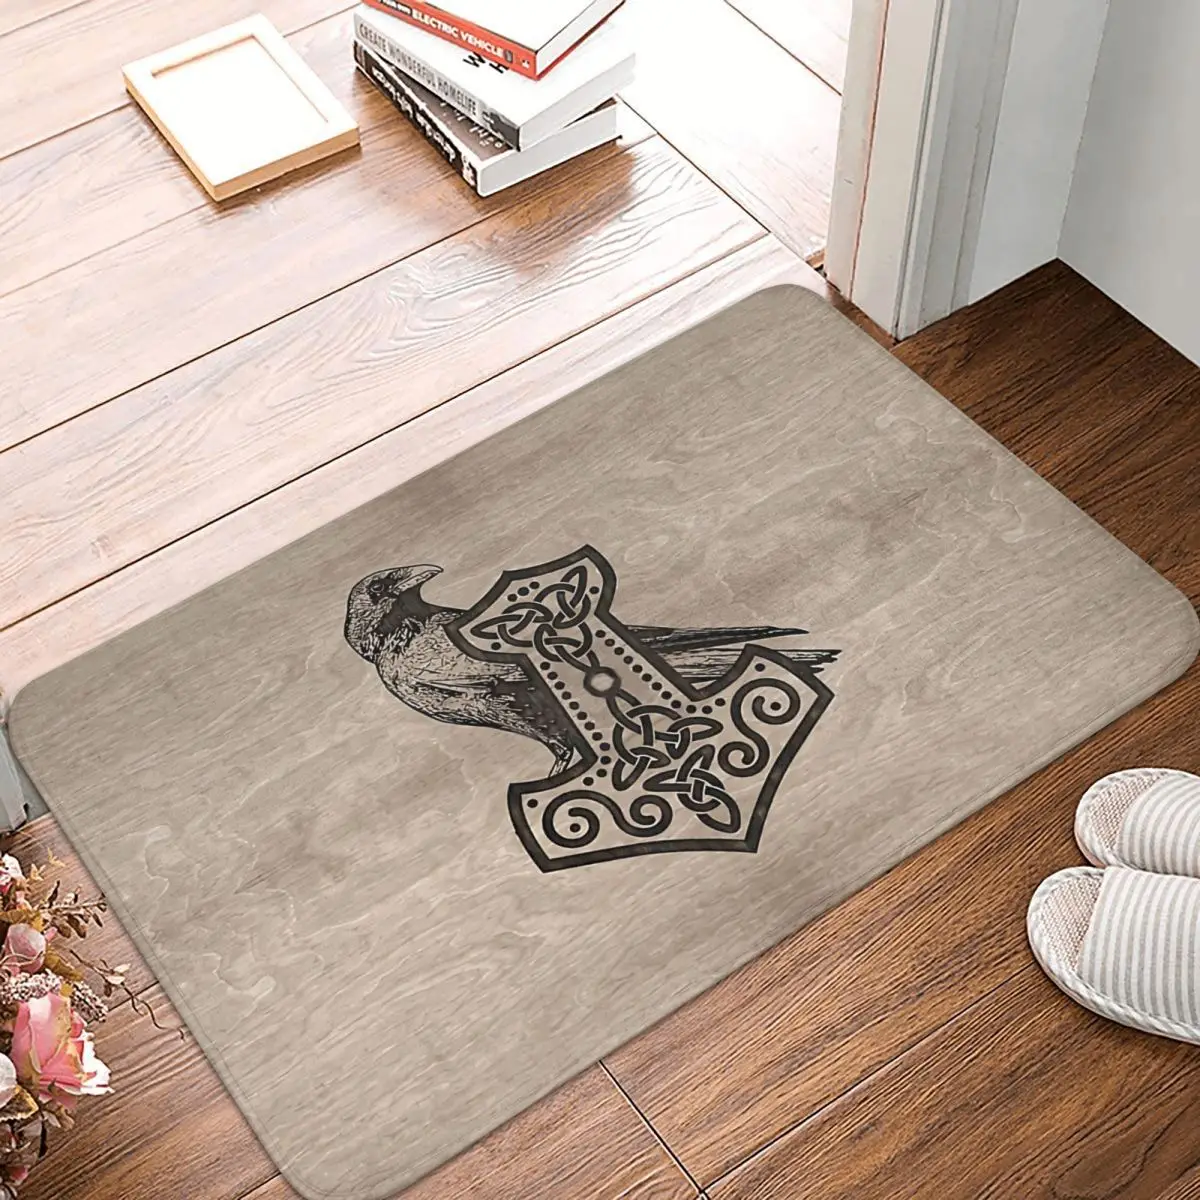 

Mjolnir The Hammer Of Thor Viking Vikings Valhalla Non-slip Rug Doormat Bath Mat Floor Carpet Indoor Decorative